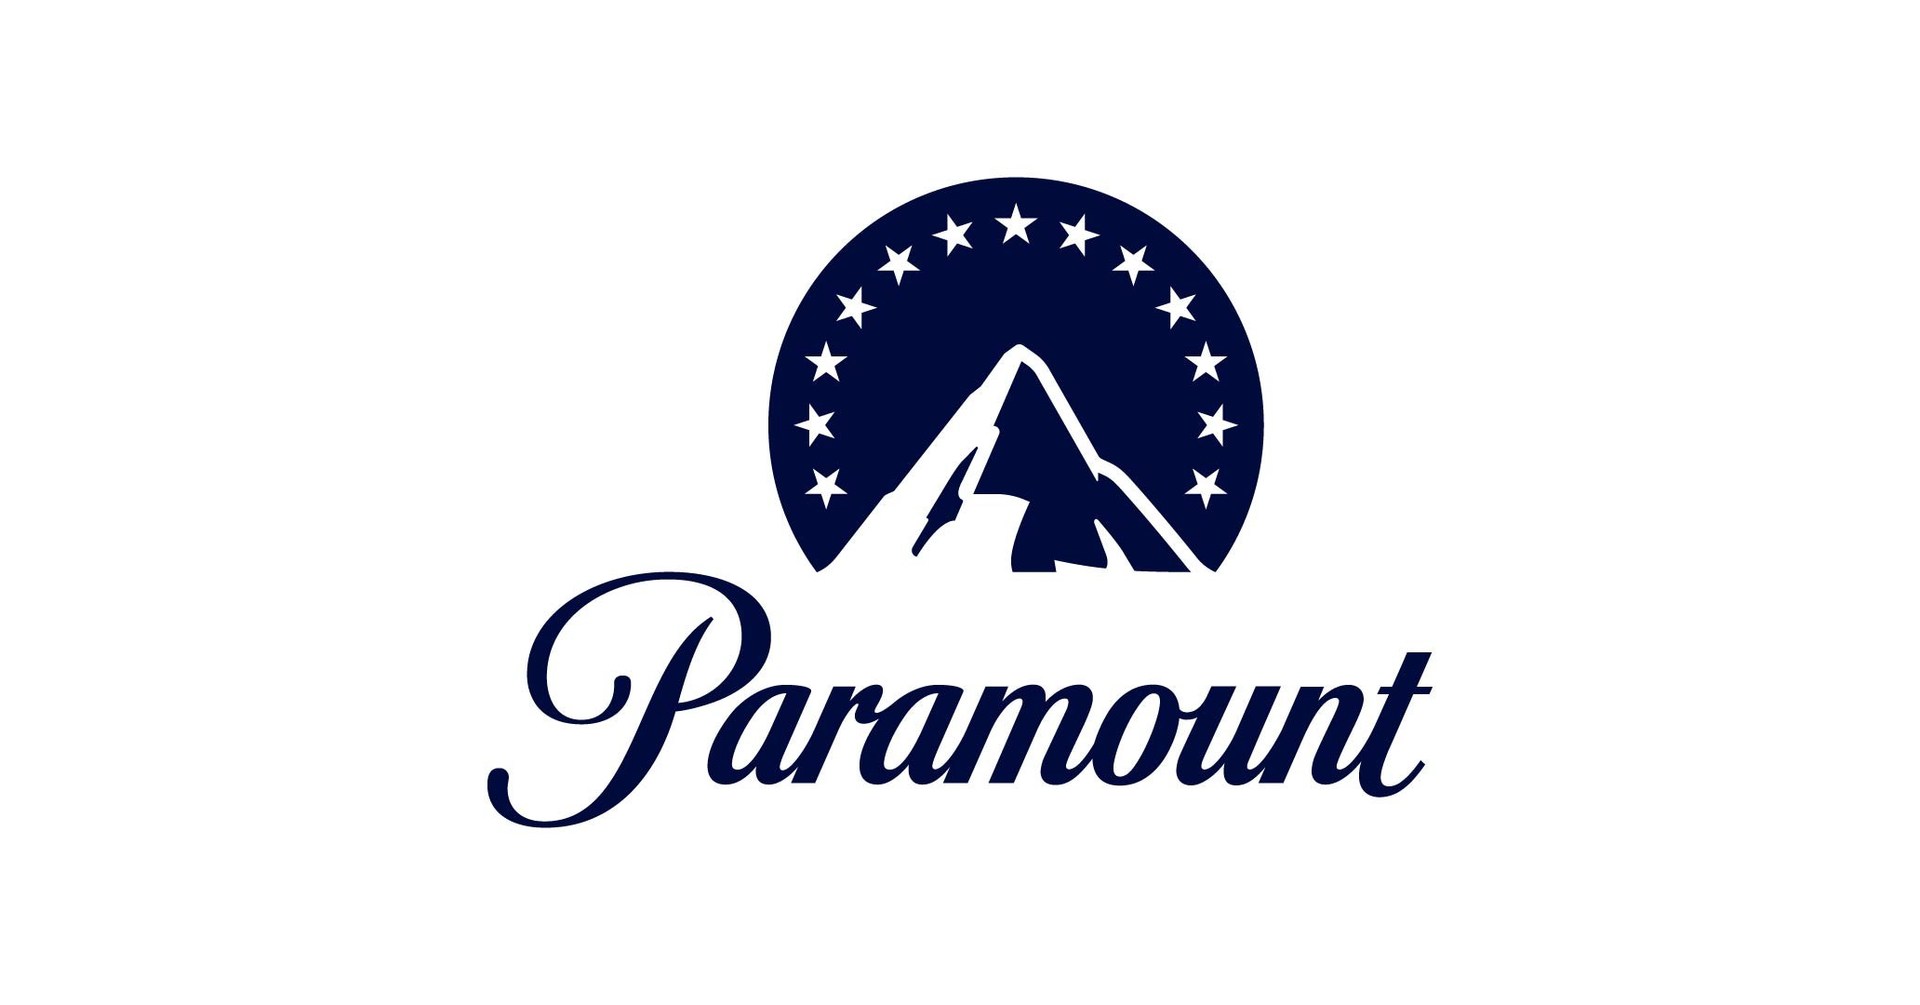 About Paradise Run on Paramount Plus